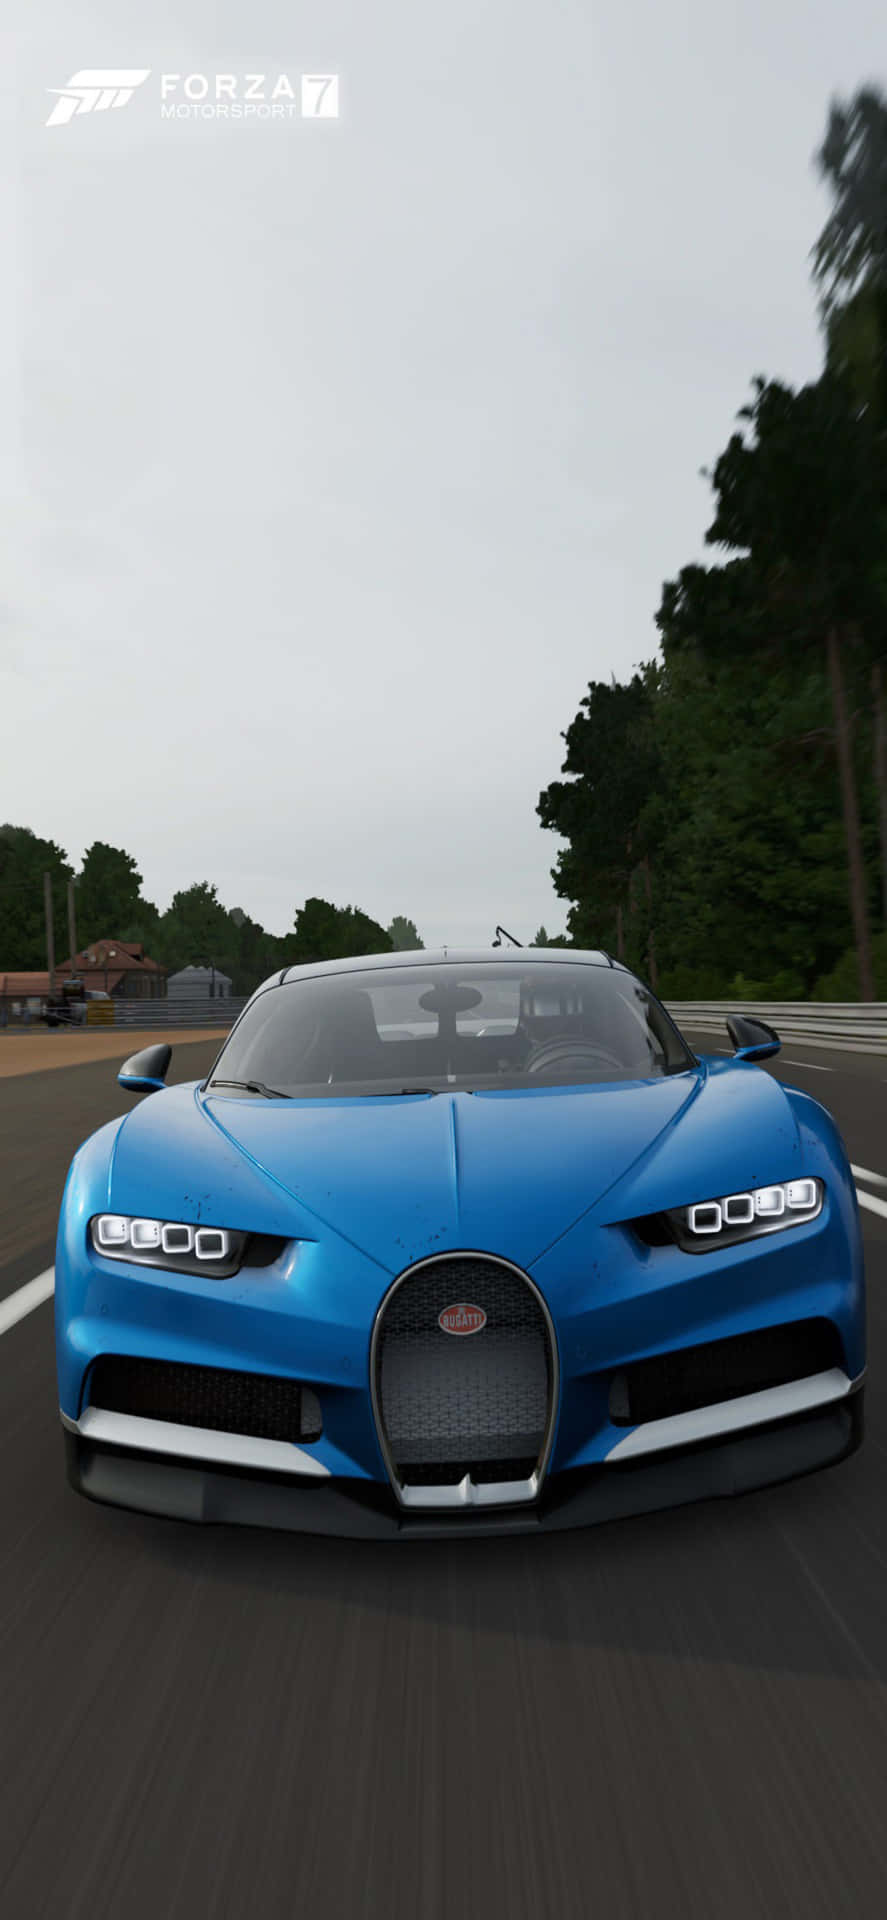 Blåbugatti Chiron Iphone X Forza Motorsport 7 Bakgrundsbild.